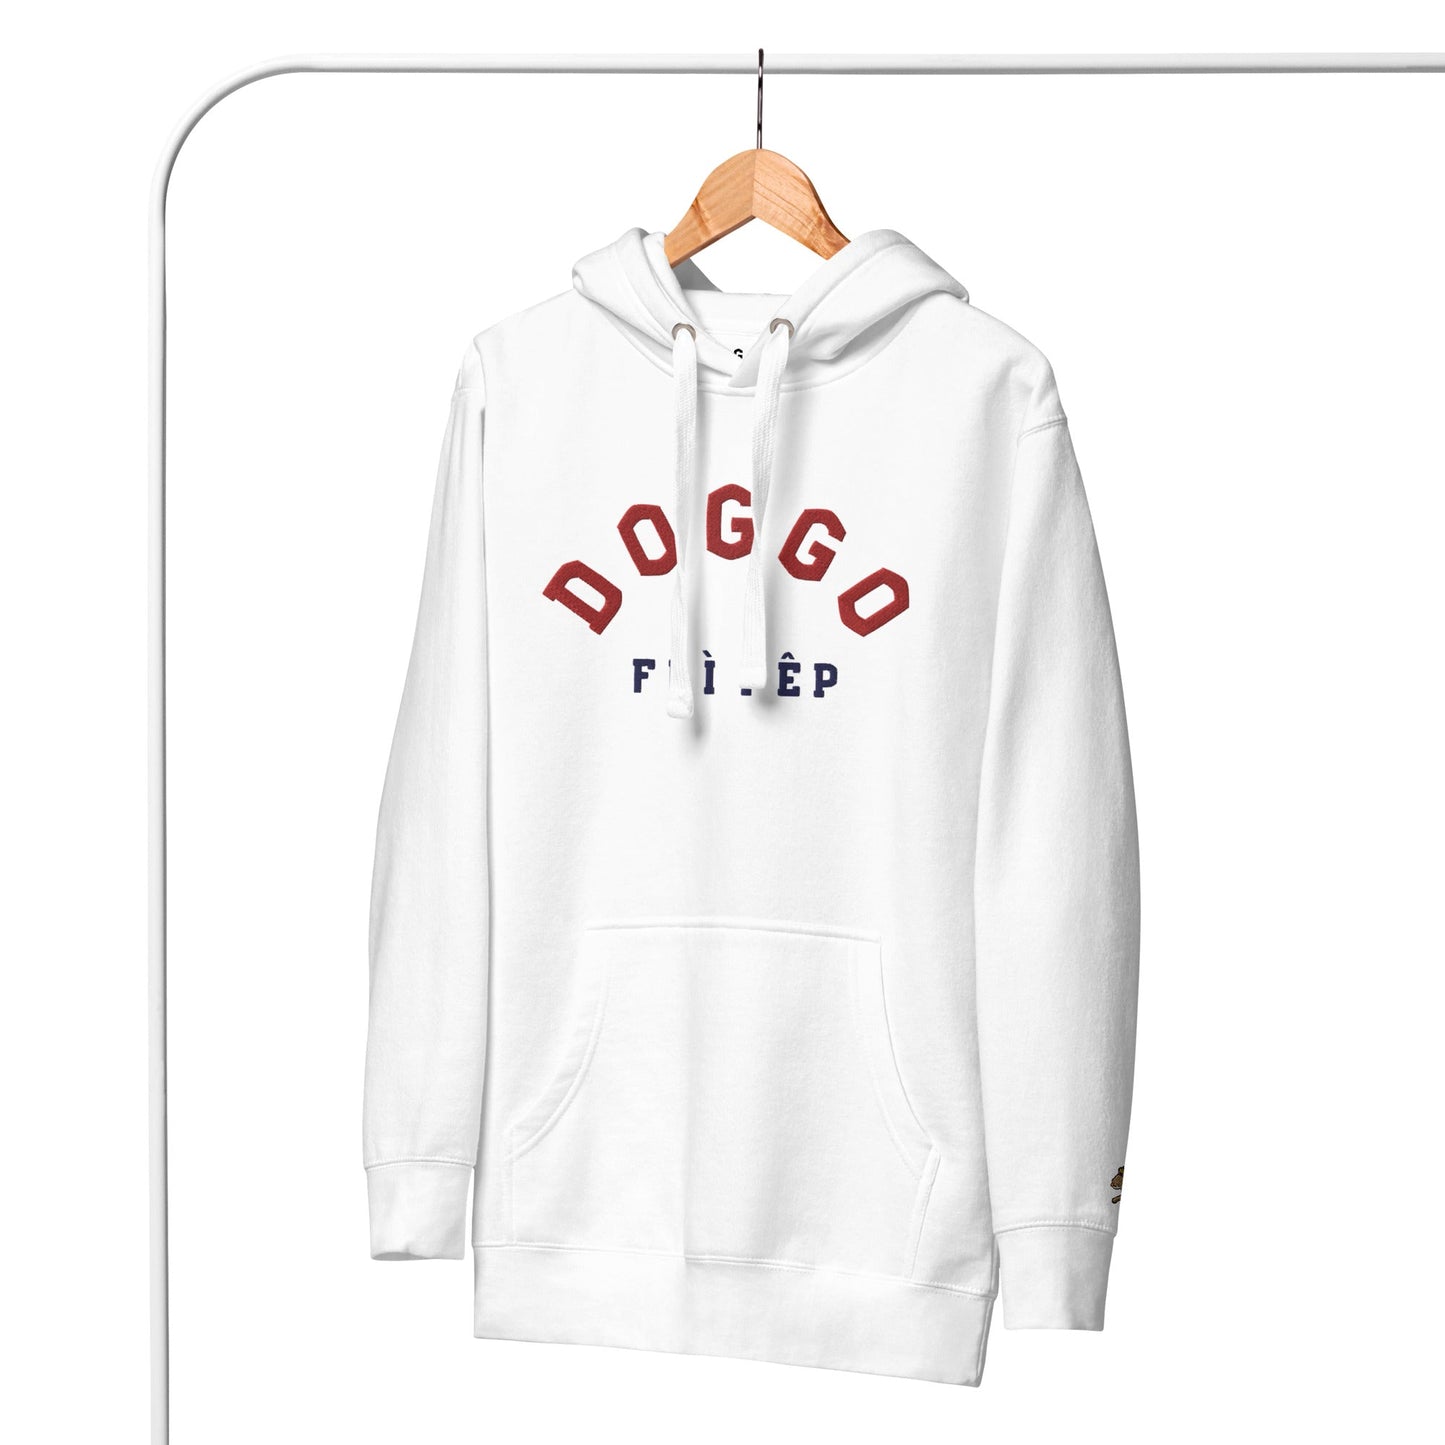 Curved Doggo Embroidered White Cotton Hoodie - FLÌ PÊP™